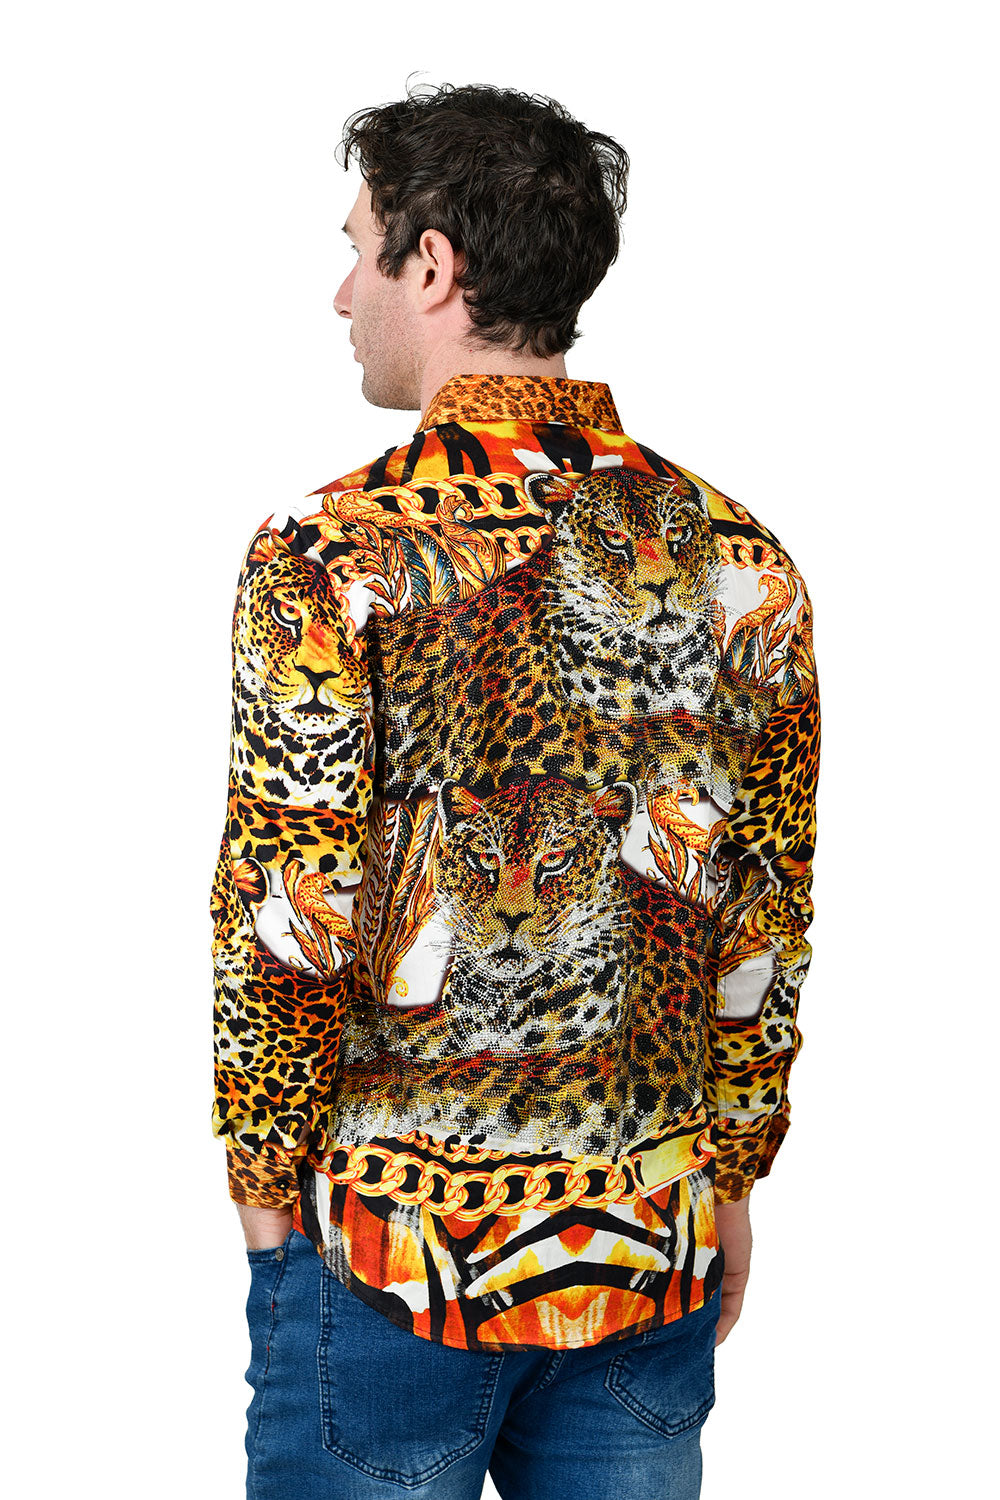 Barabas Men's Rhinestone Printed Leopard Chain Floral Shirts SPR963